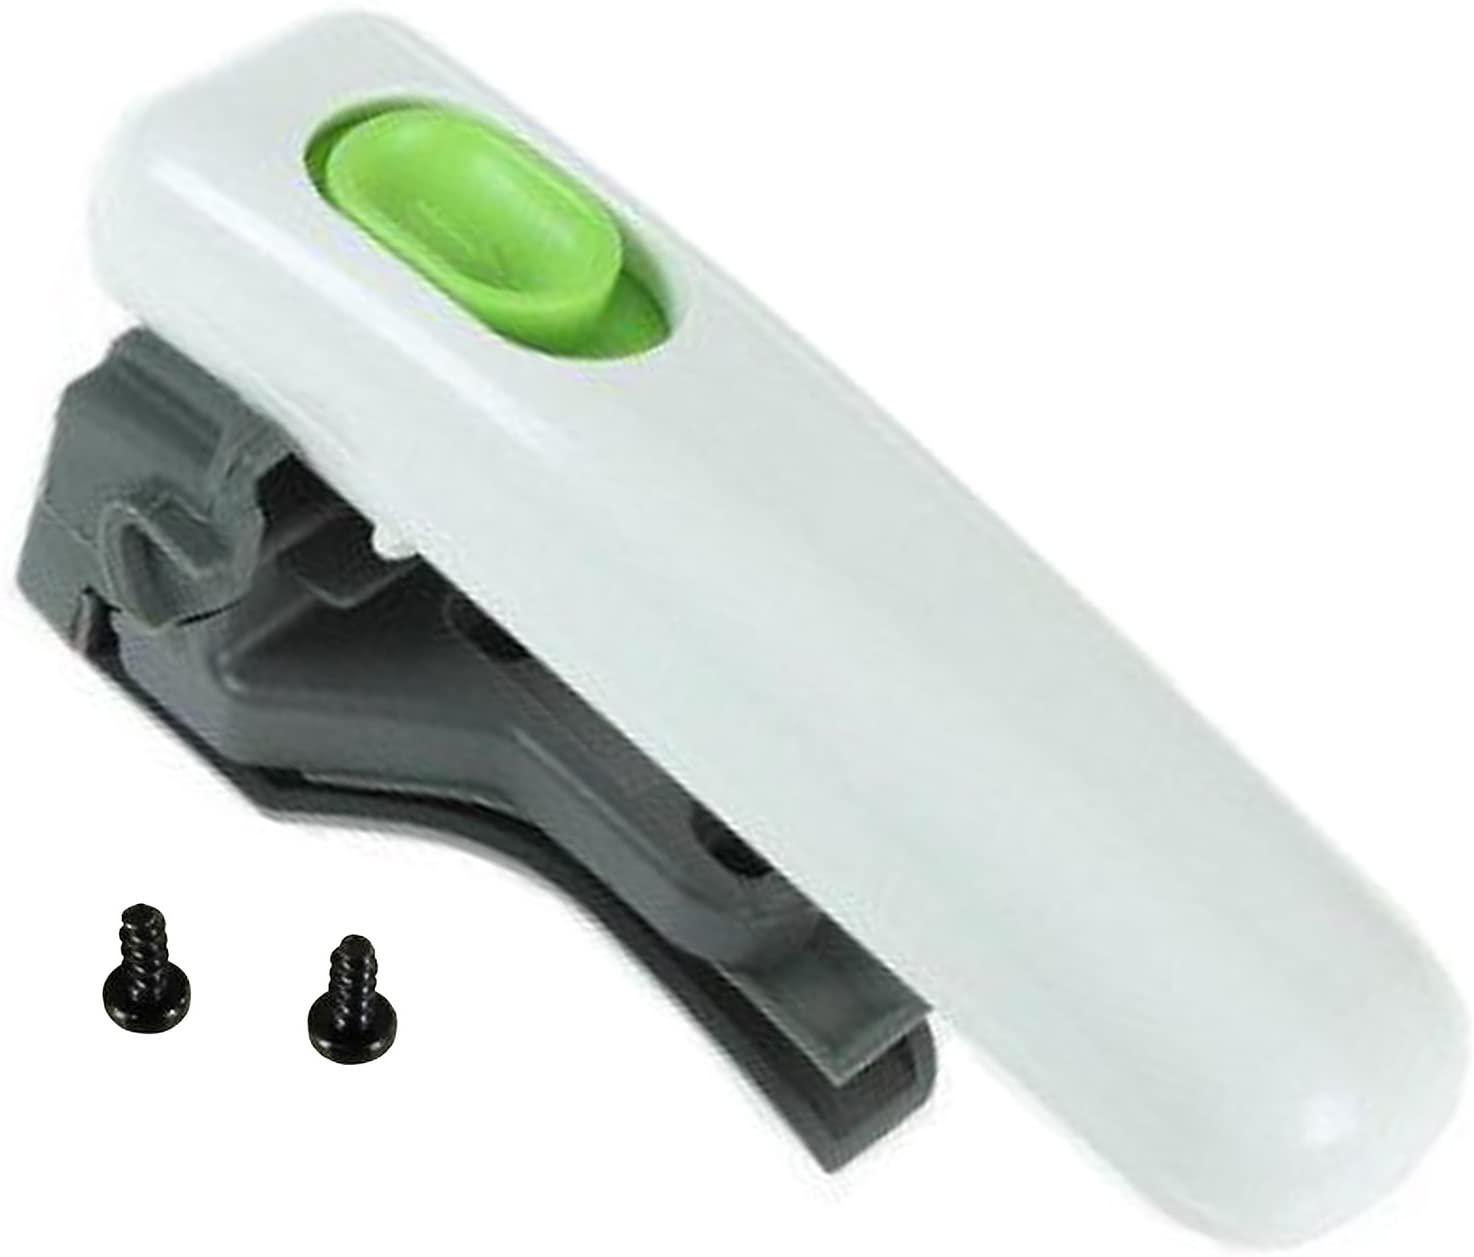 Tefal Actifry Family Fryer Handle with Screws AH9000 AH900015 SEB White Green SS992252